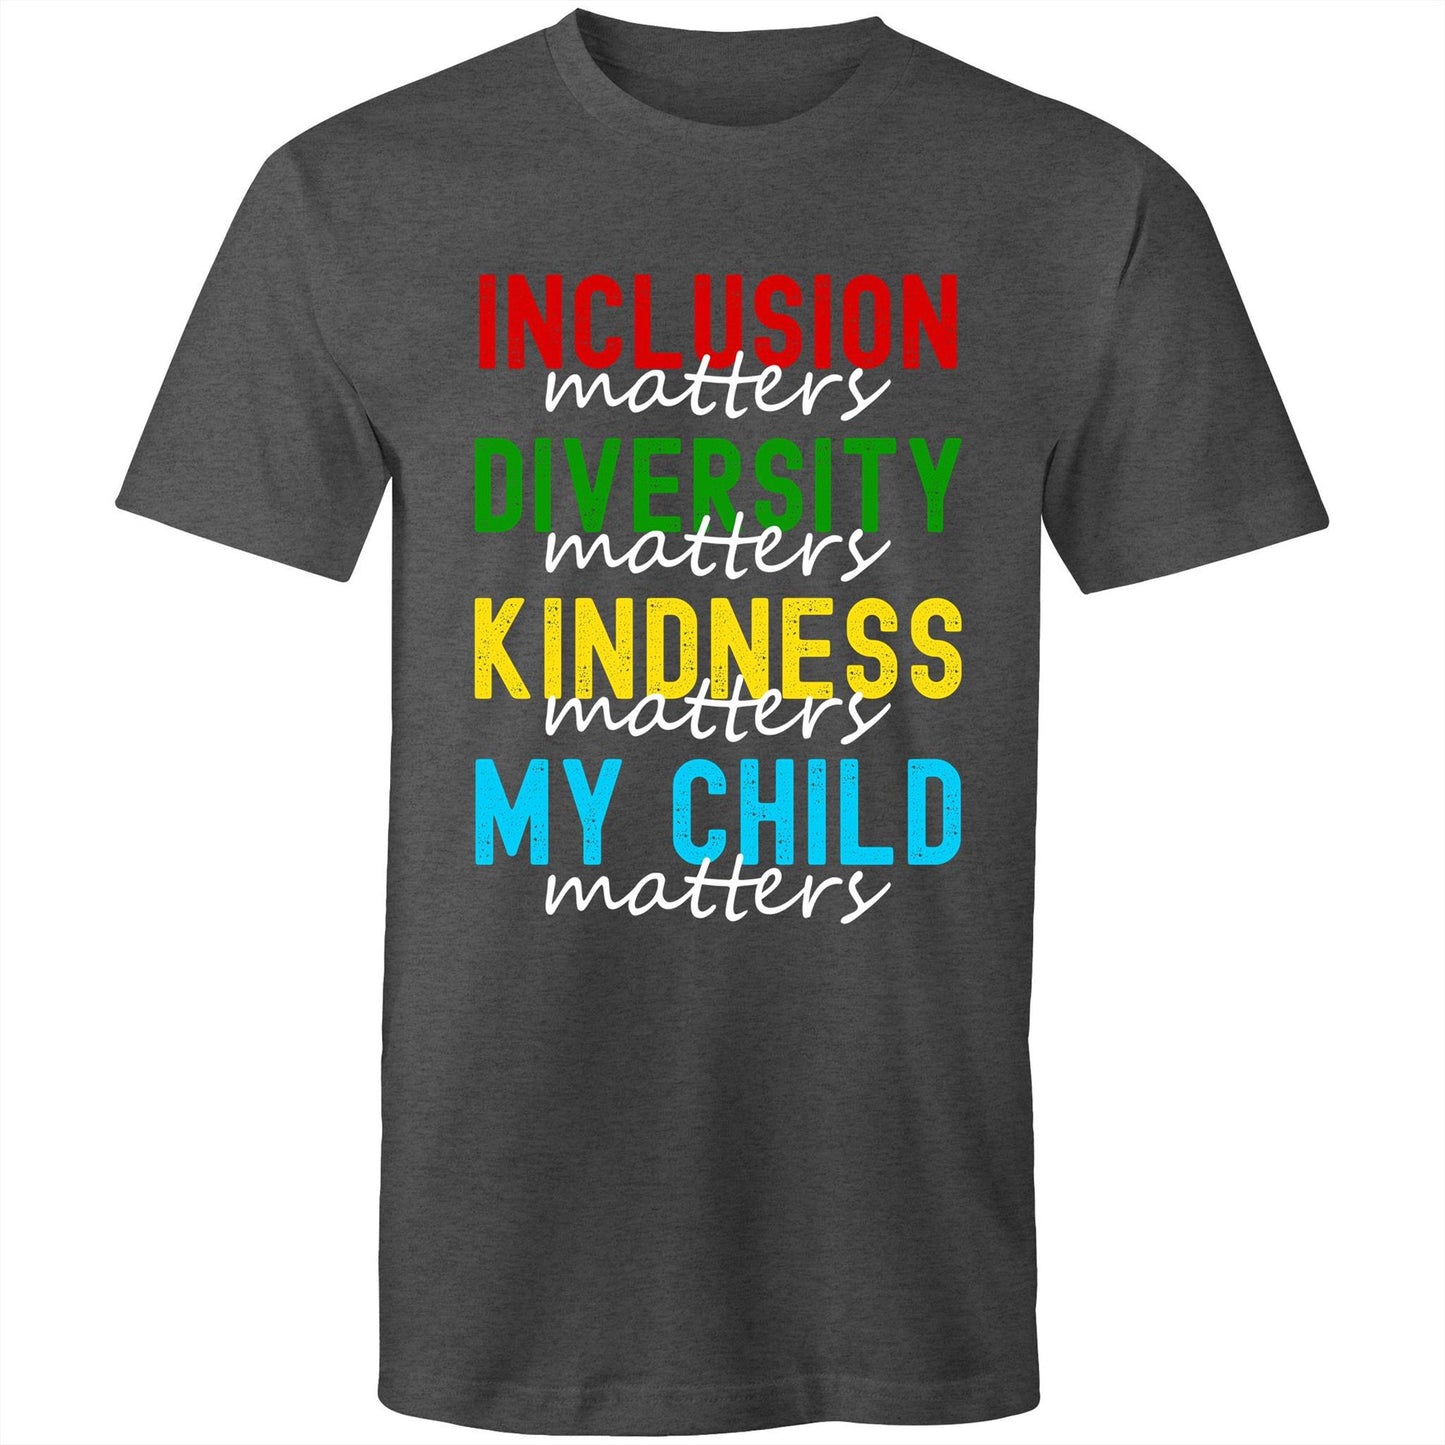 My Child Matters - Mens T-Shirt